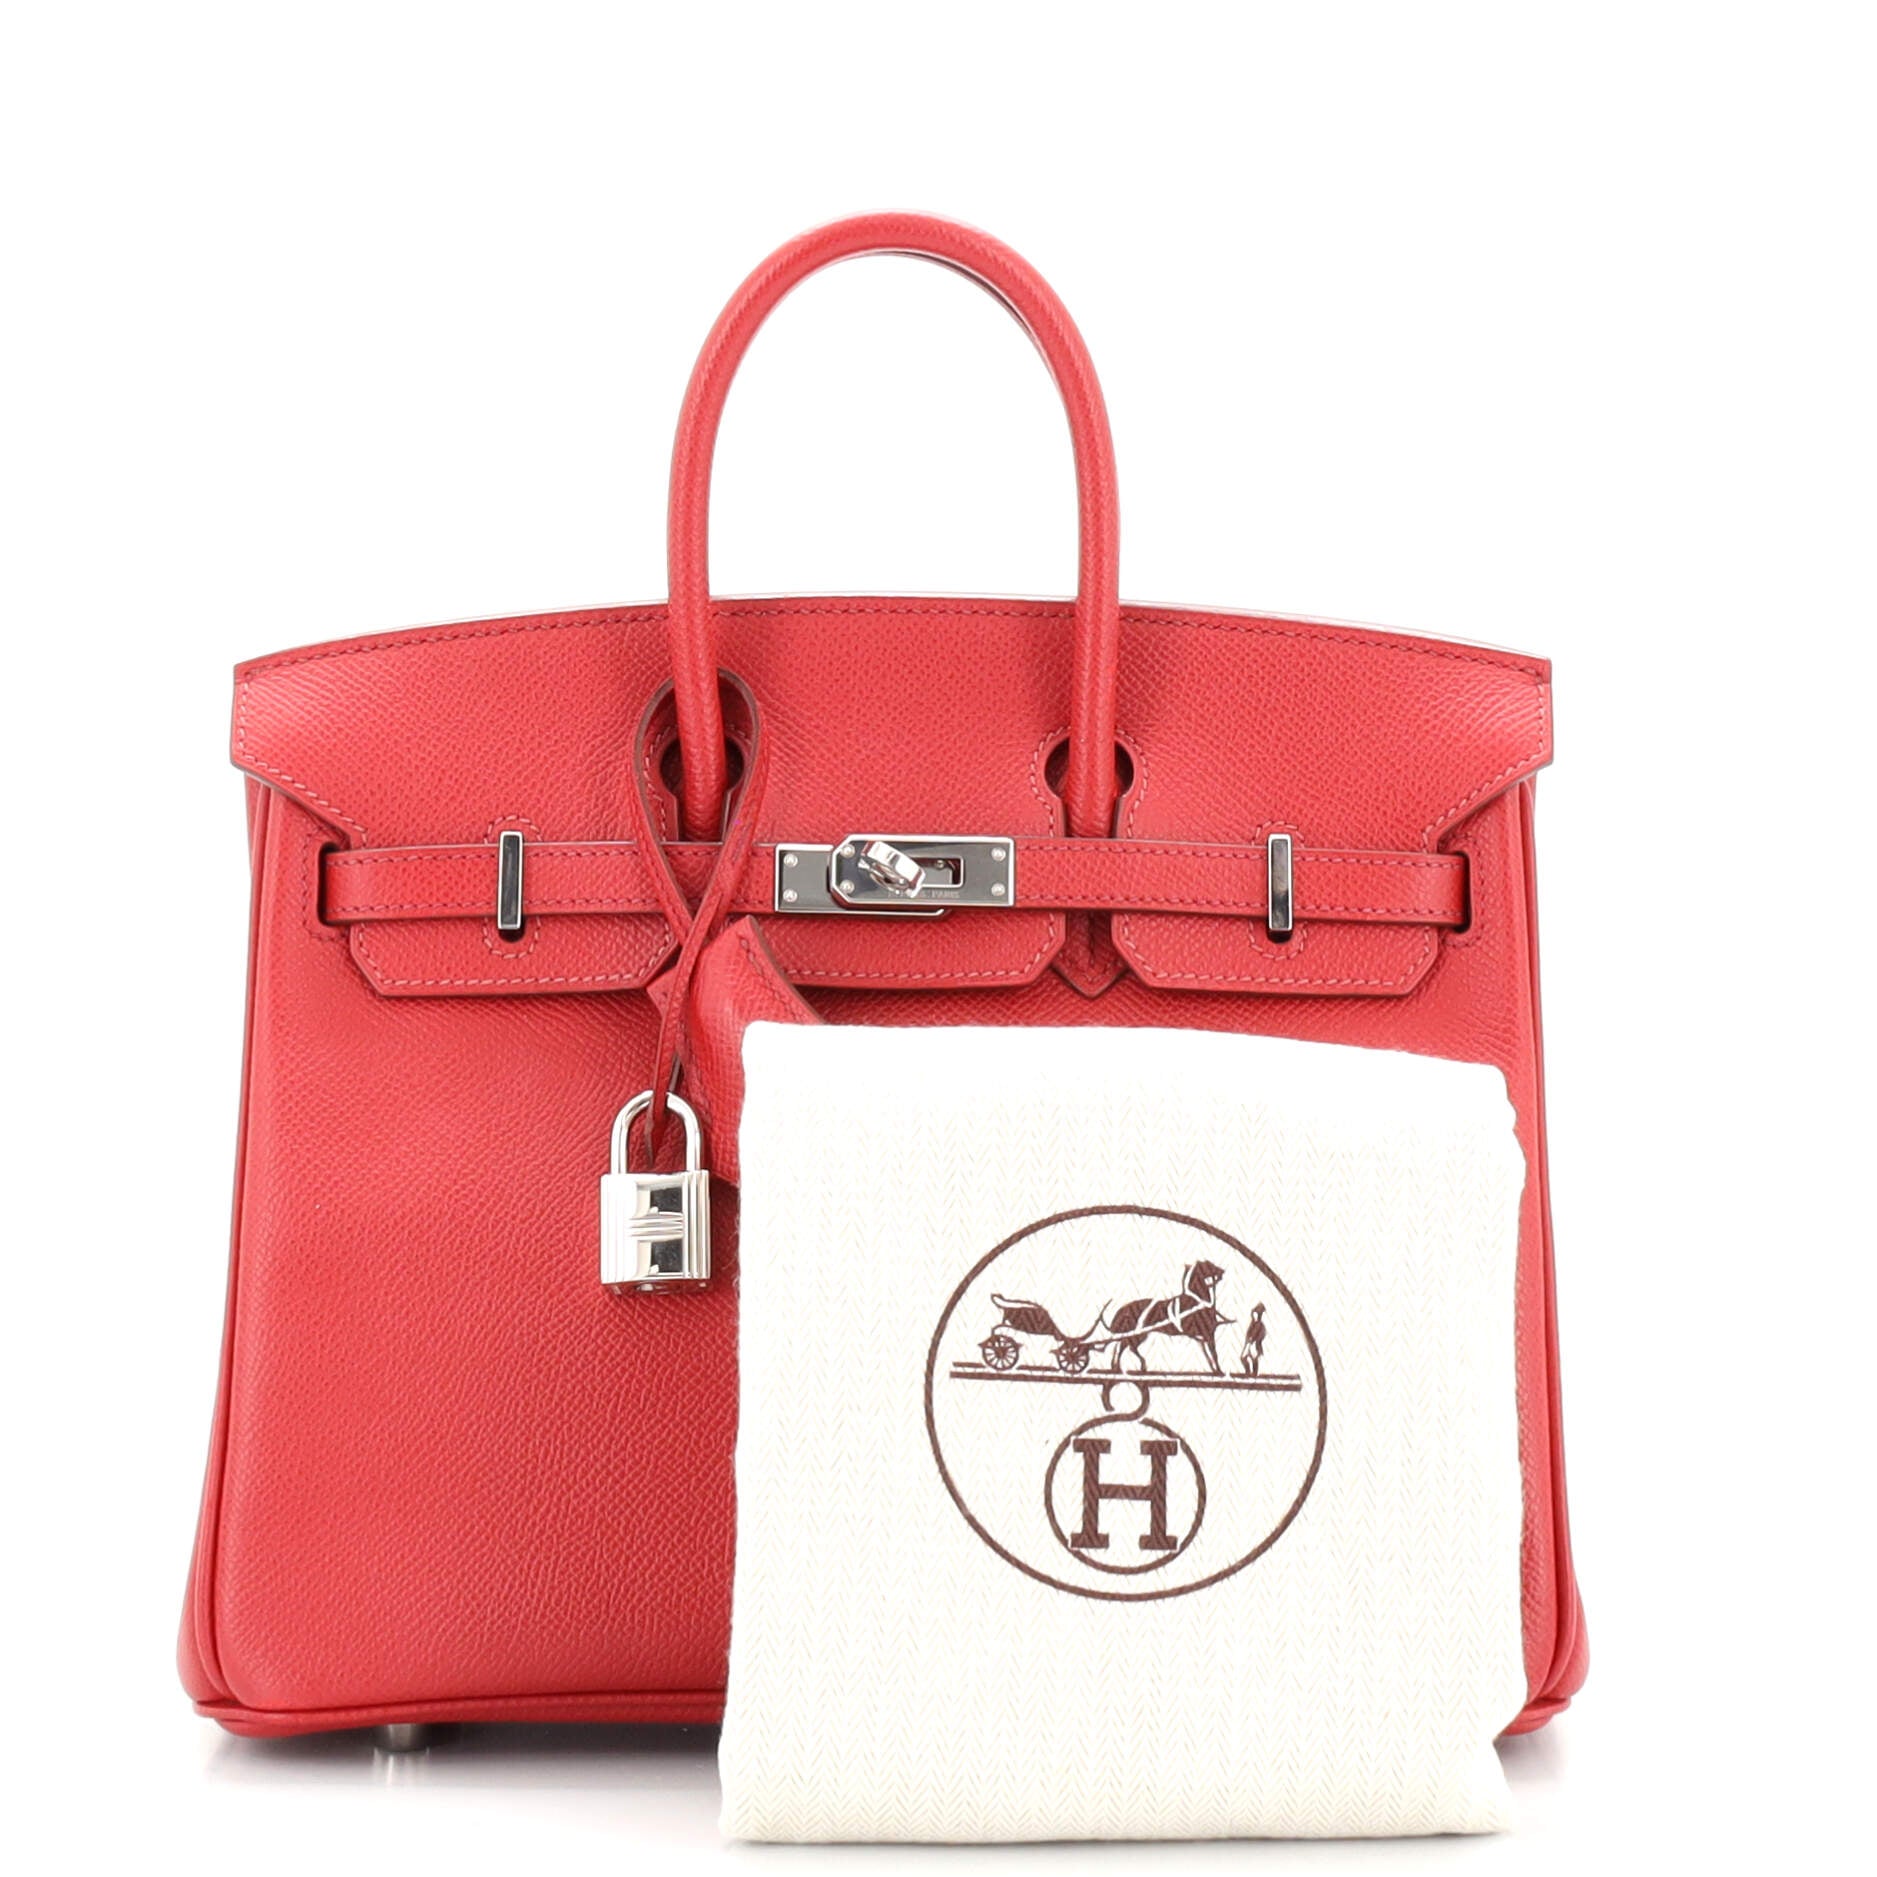 Hermes Birkin Handbag Rouge Garance Epsom with Palladium Hardware 25